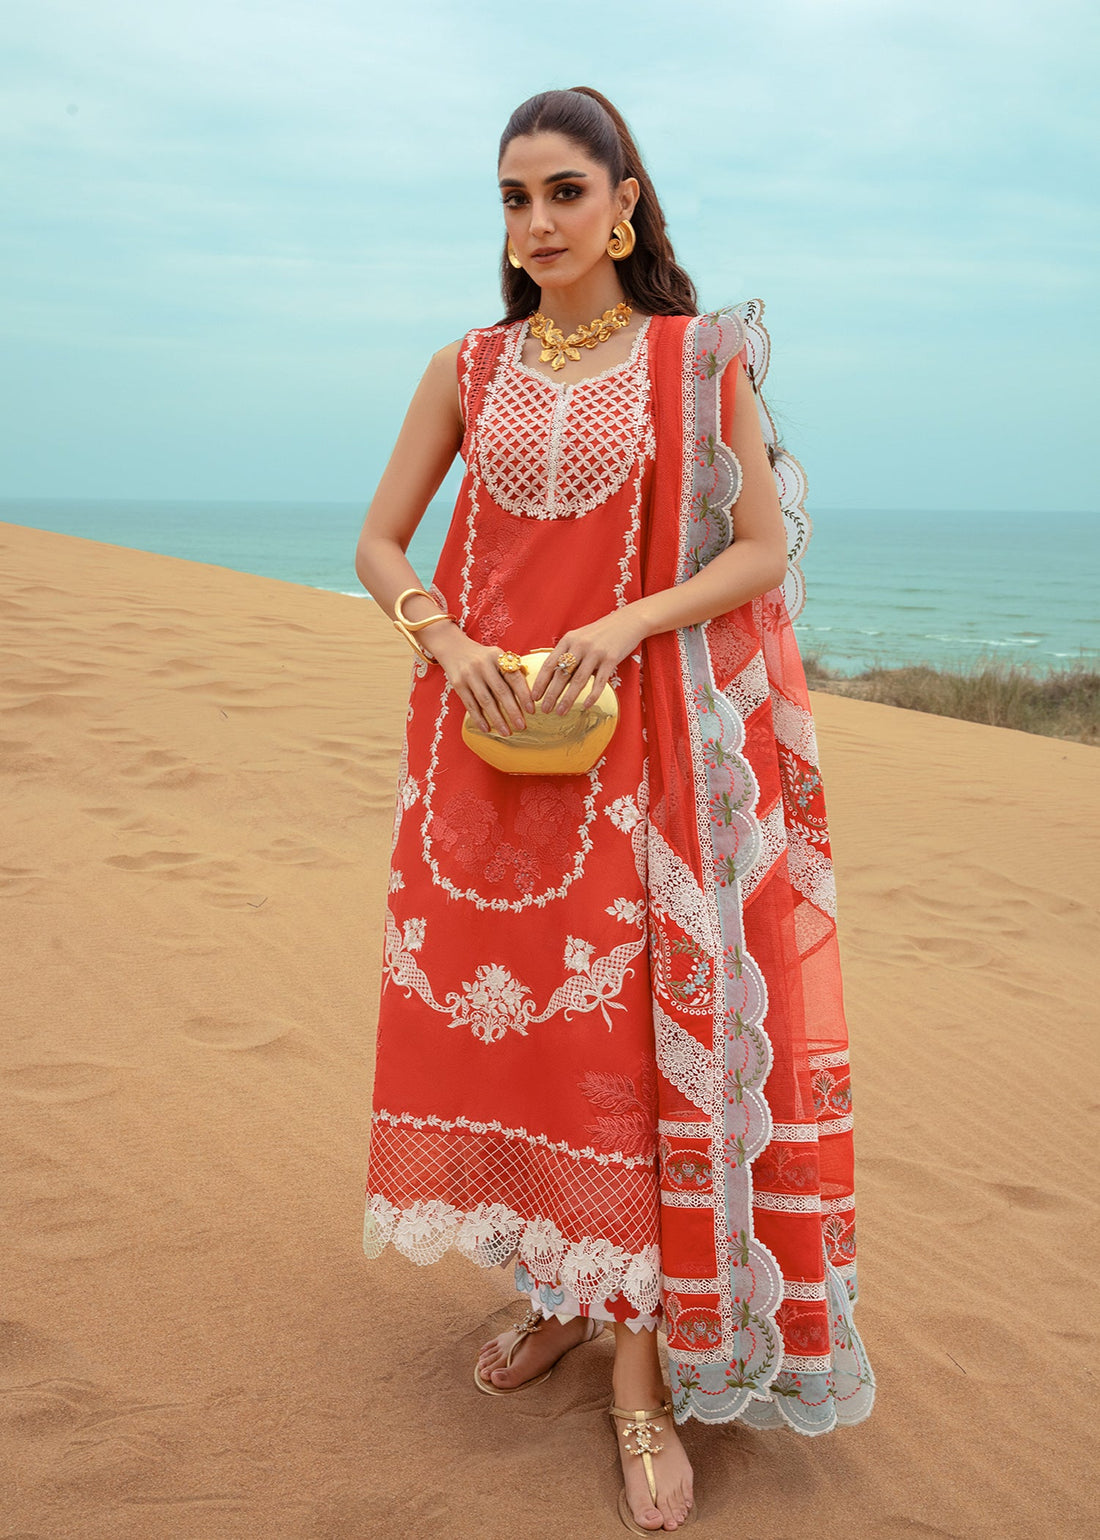 Crimson | Lawn 24 | Stars of Fire - Fiesta Coral - Khanumjan  Pakistani Clothes and Designer Dresses in UK, USA 